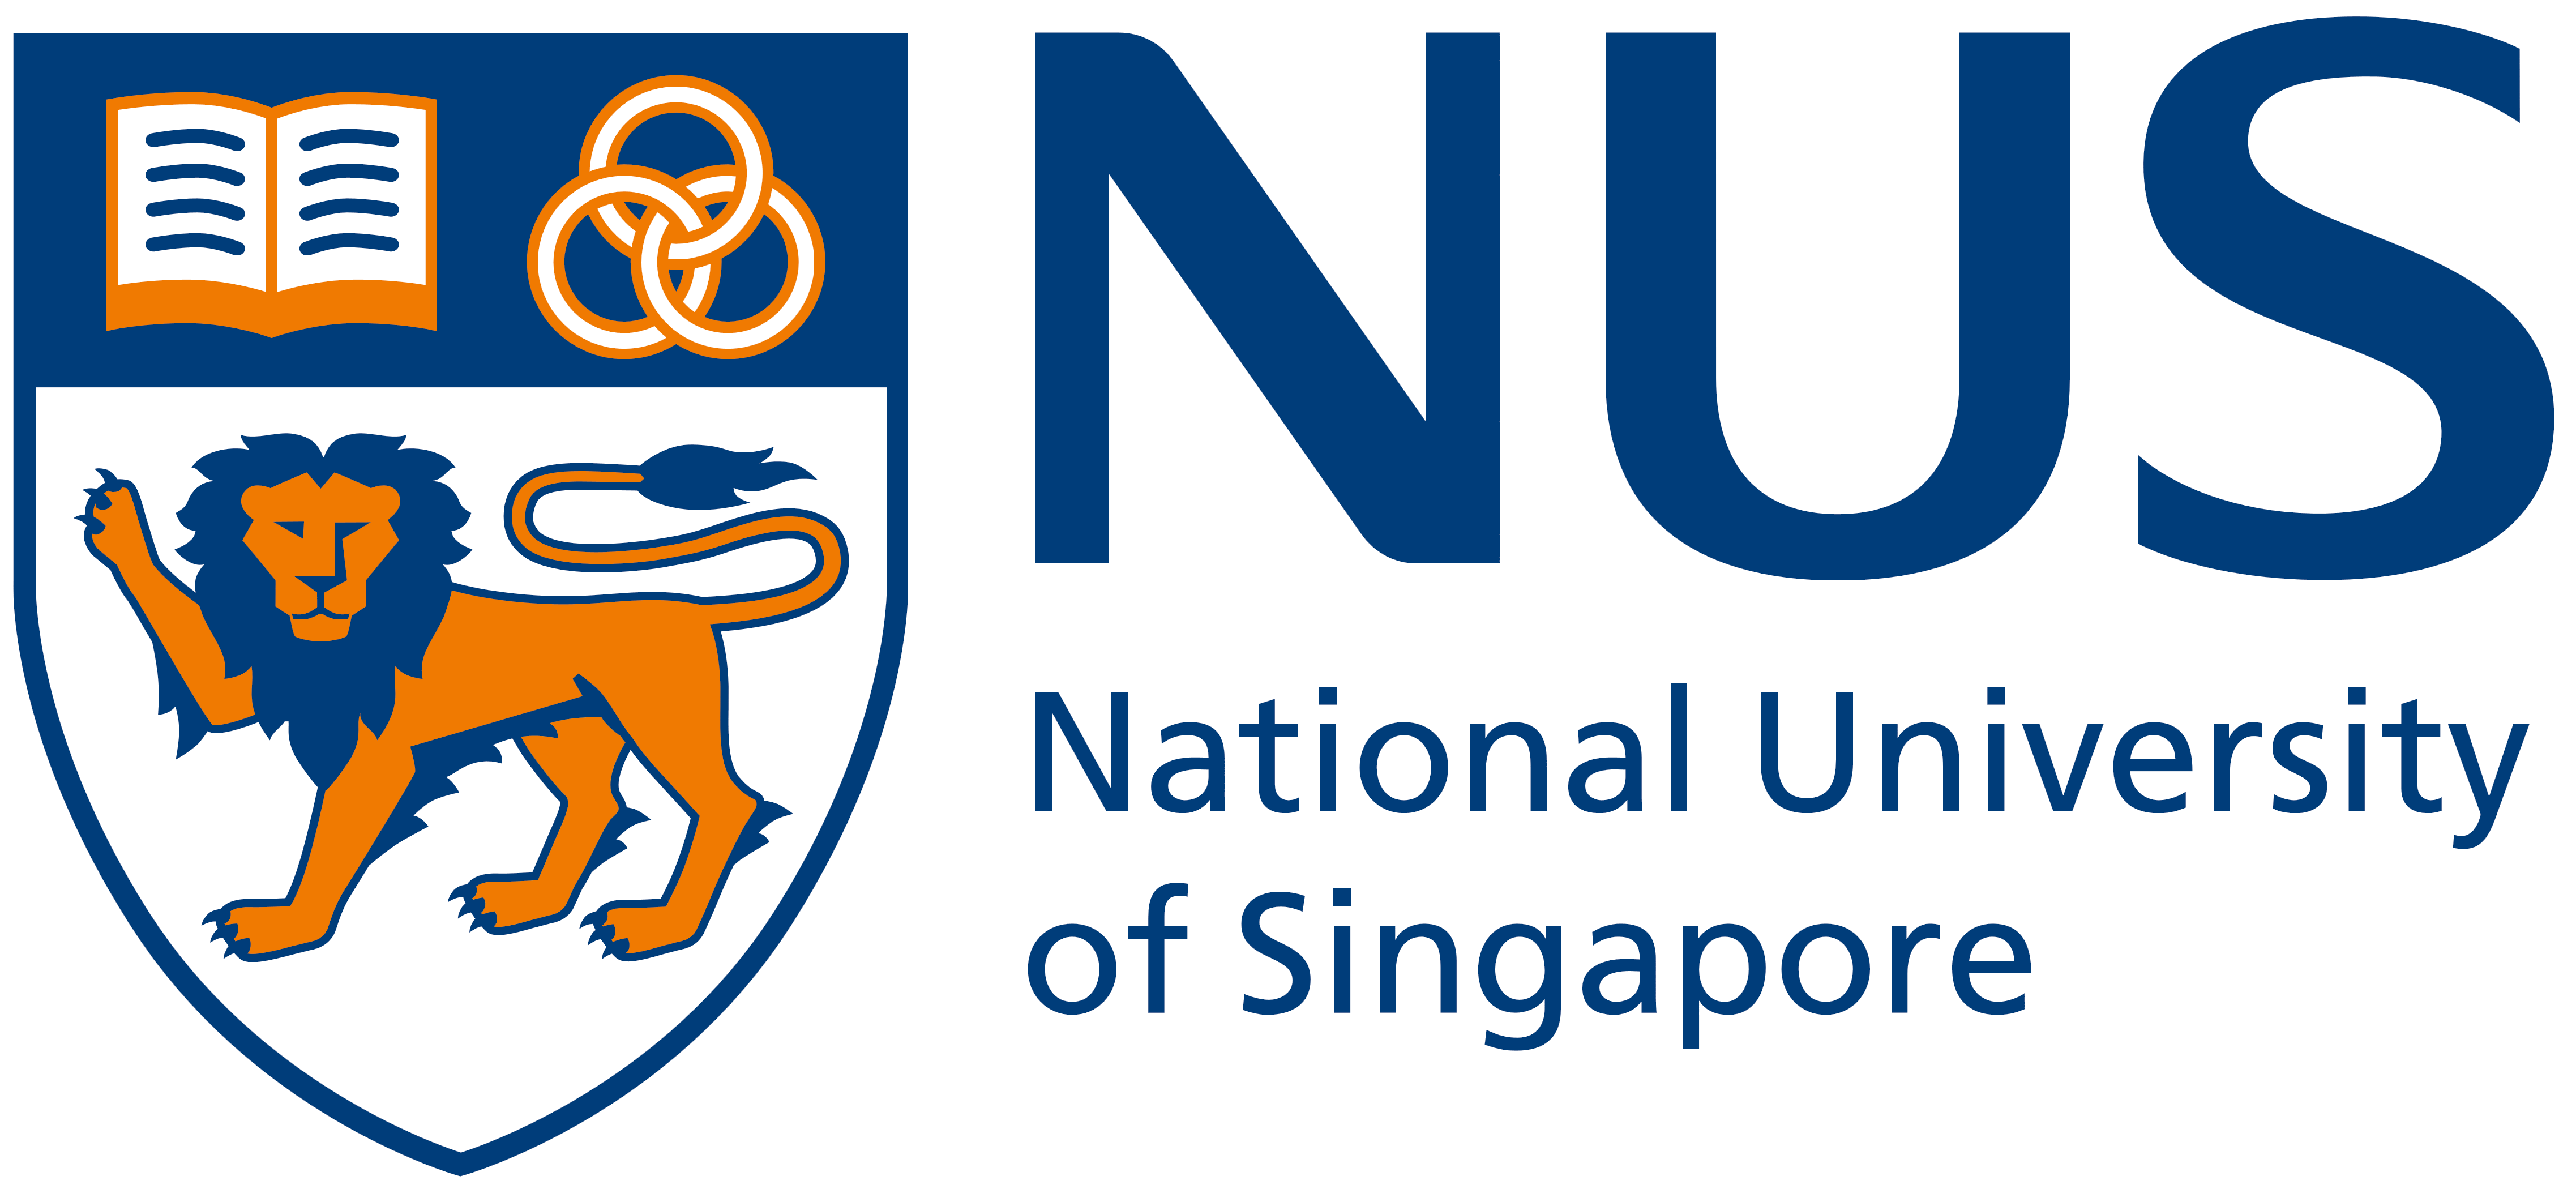 NUS Logo - National University Of Singapore (NUS)